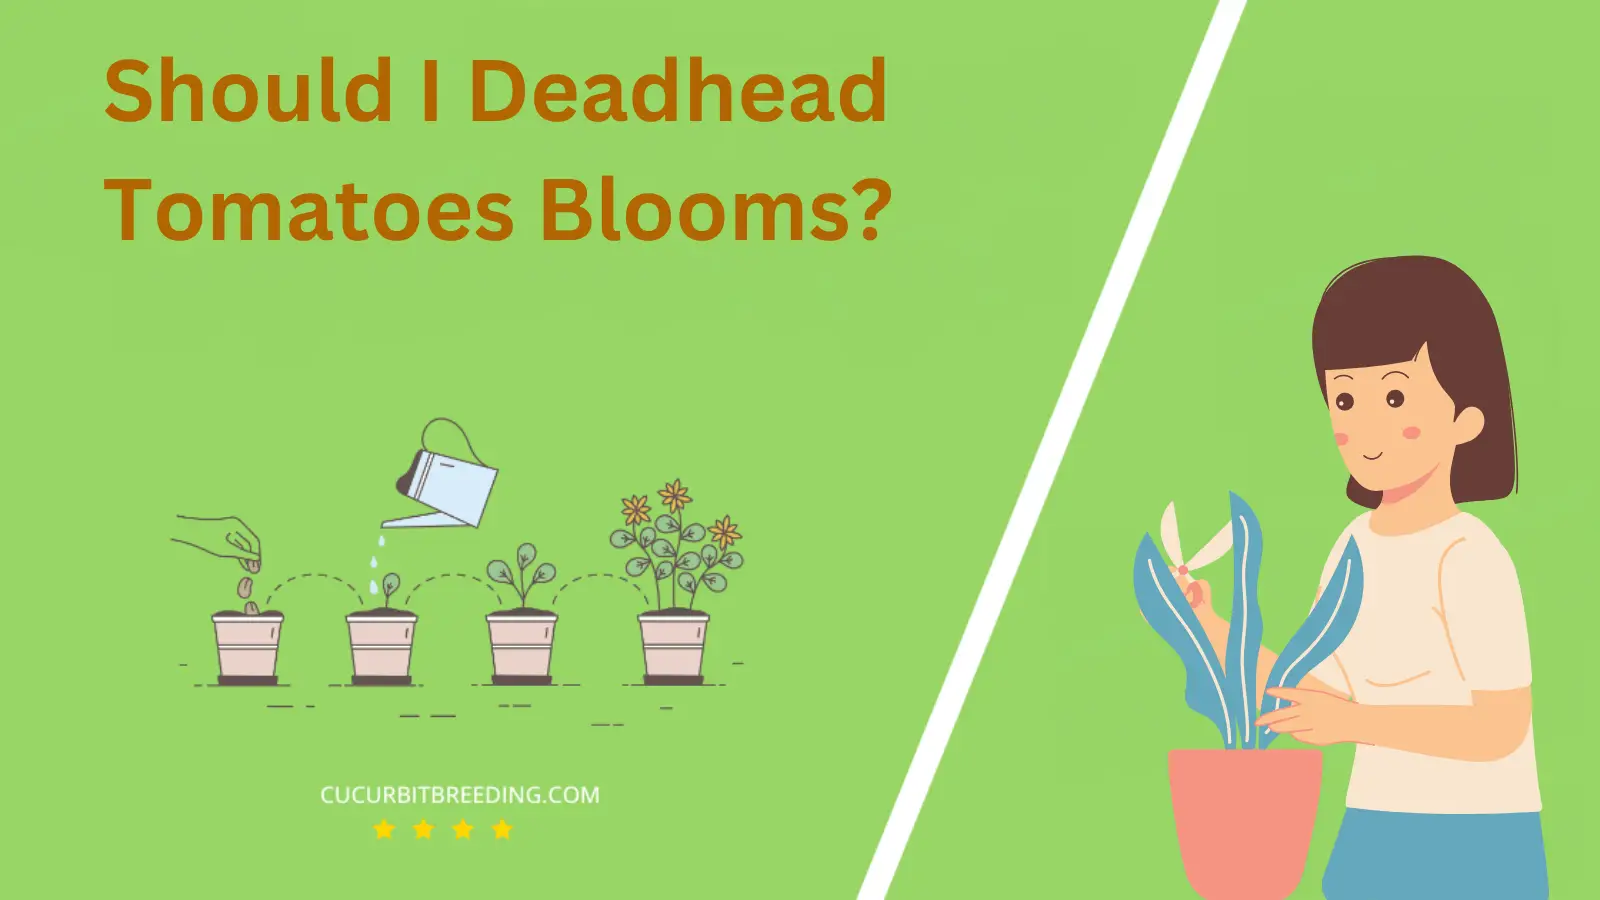 Should I Deadhead Tomatoes Blooms?